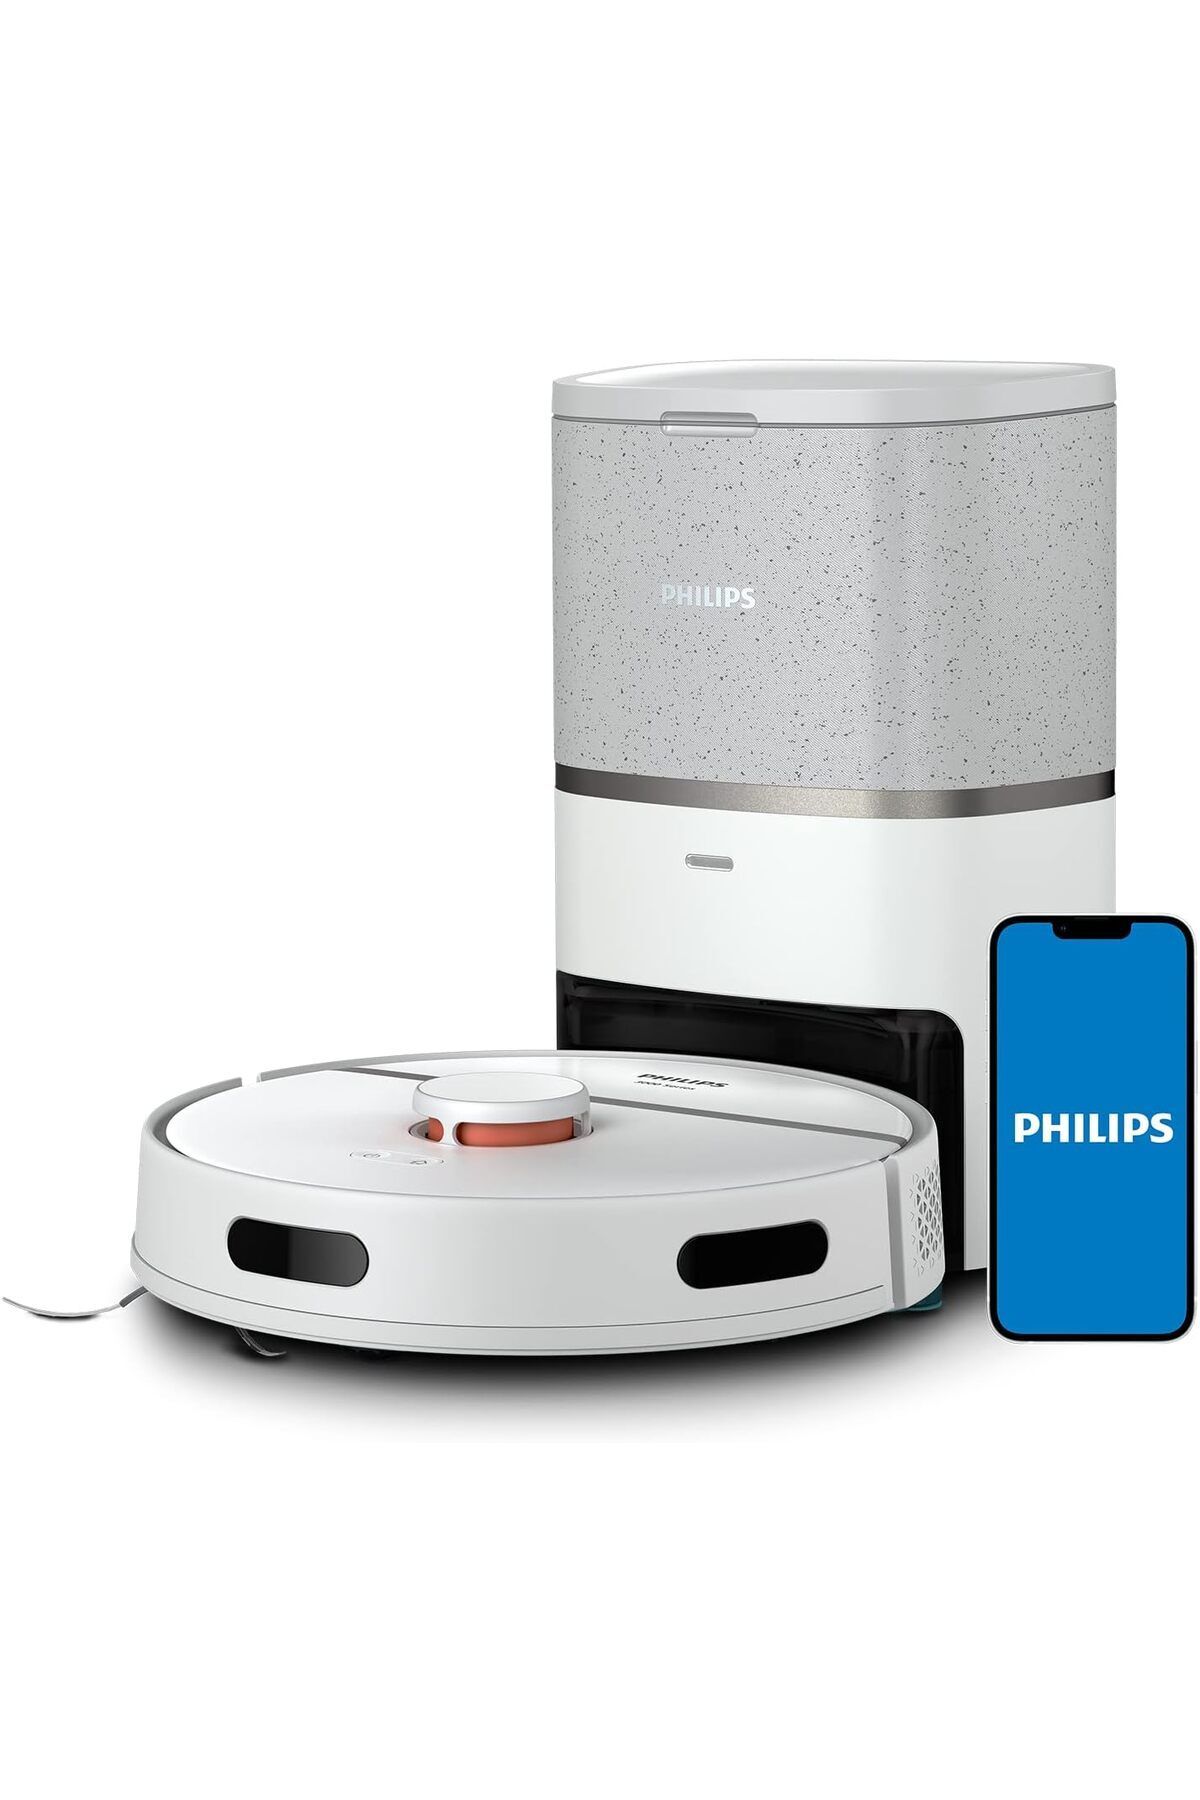 Philips Islak ve Kuru Temizlik Robotu Otomatik Boşaltma İstasyonu XU3110/02 HomeRun 3000 Serisi Aqua